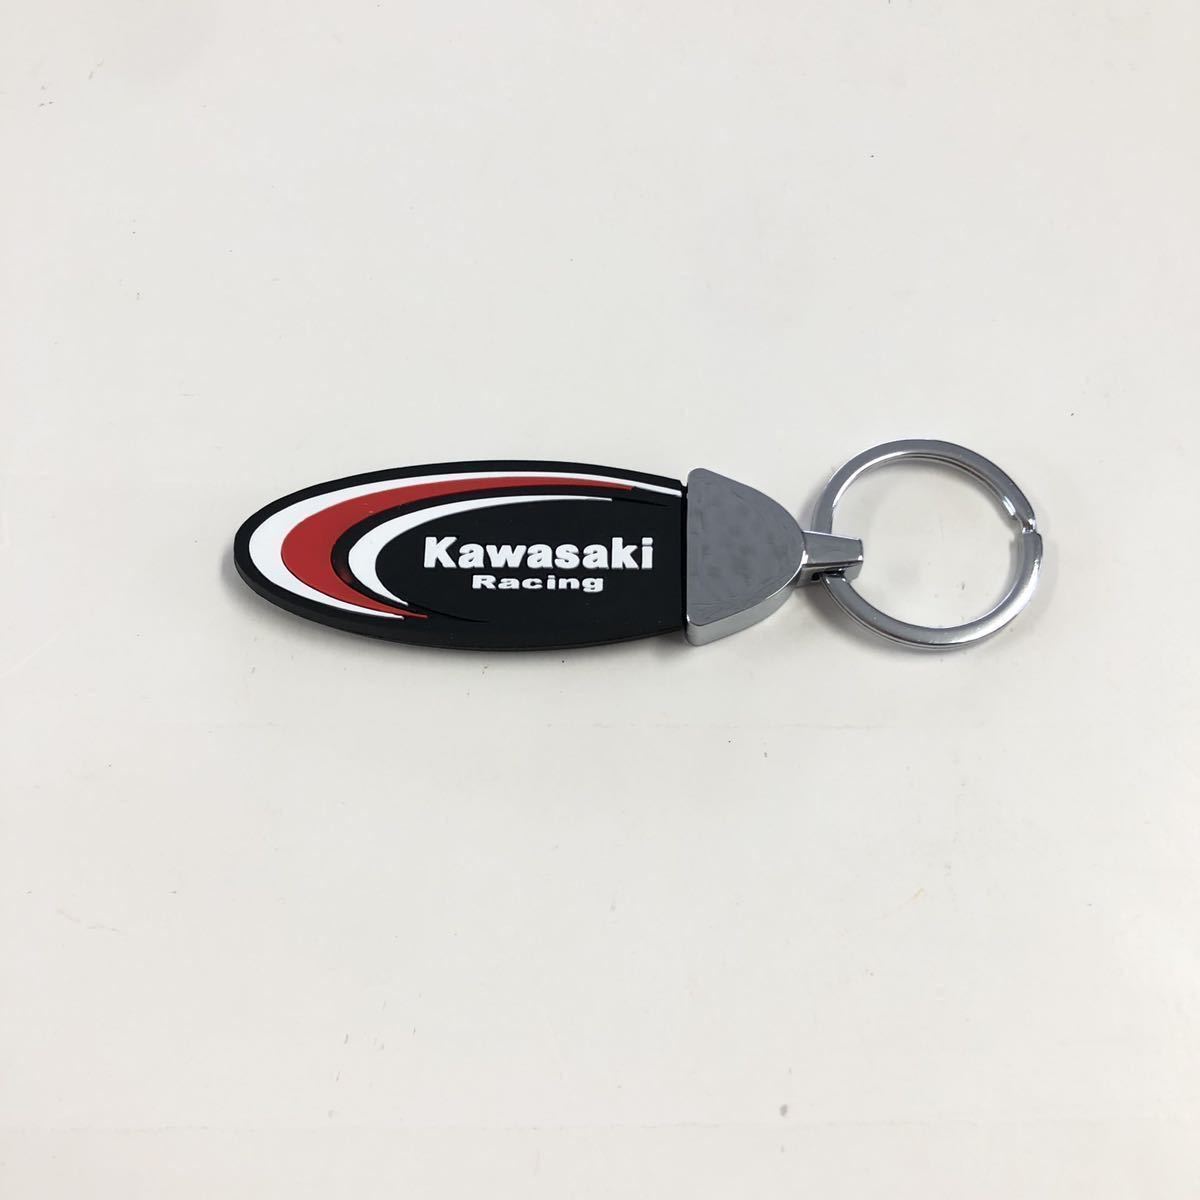  Kawasaki рейсинг силикон брелок для ключа красный 